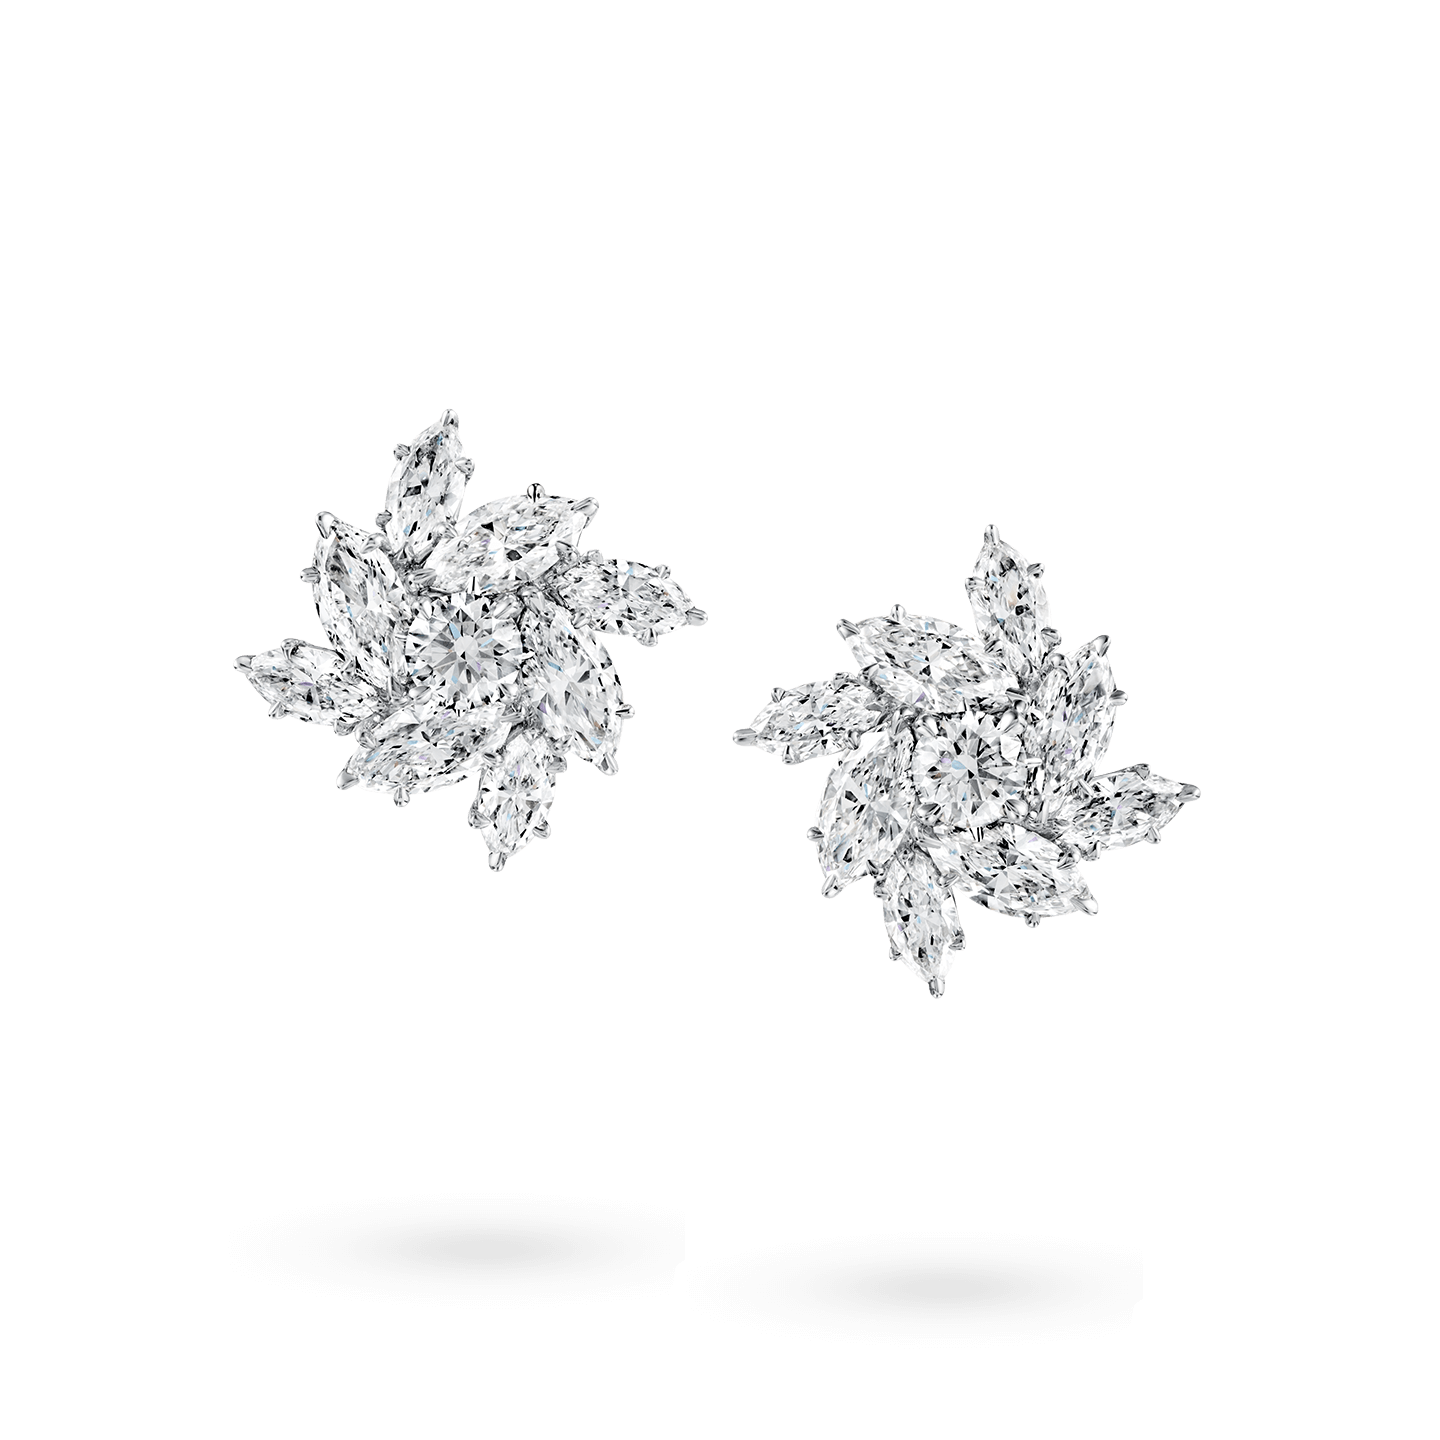 Pirouette Diamond Earrings, Product Image 1